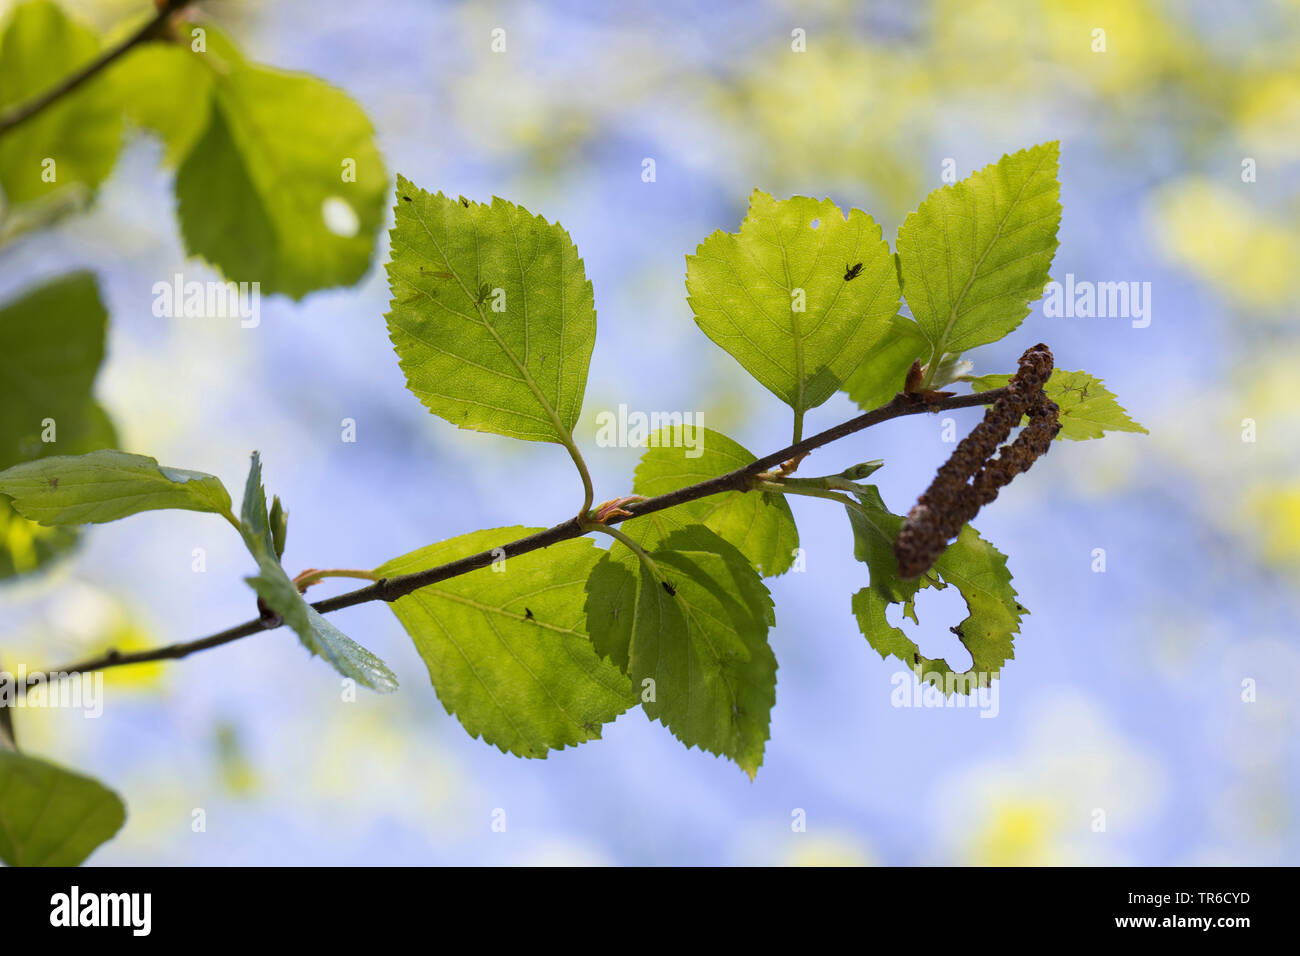 downy birch (Betula pubescens), branch with catkins, Germany Stock Photo